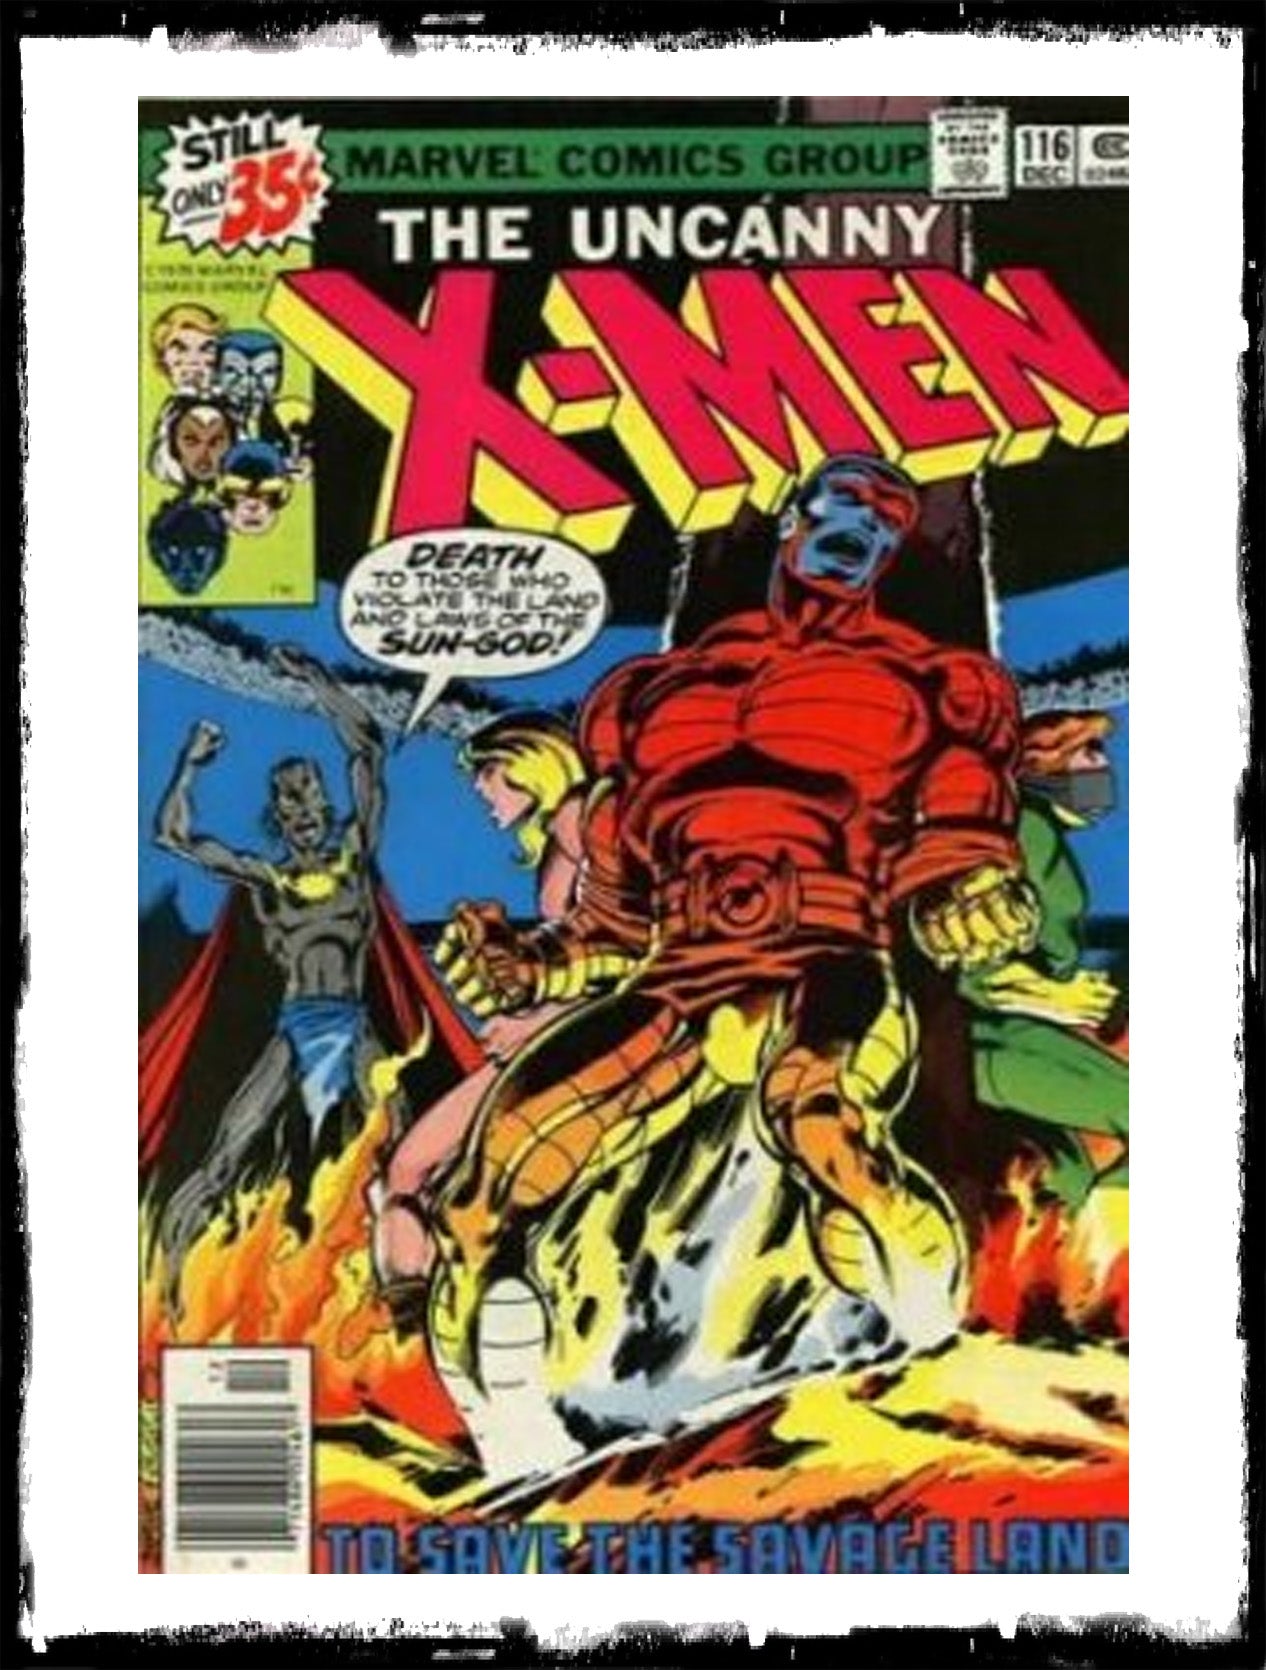 UNCANNY X-MEN - #116 1ST APP OF SHADOW KING (1978 - VF+/NM-)